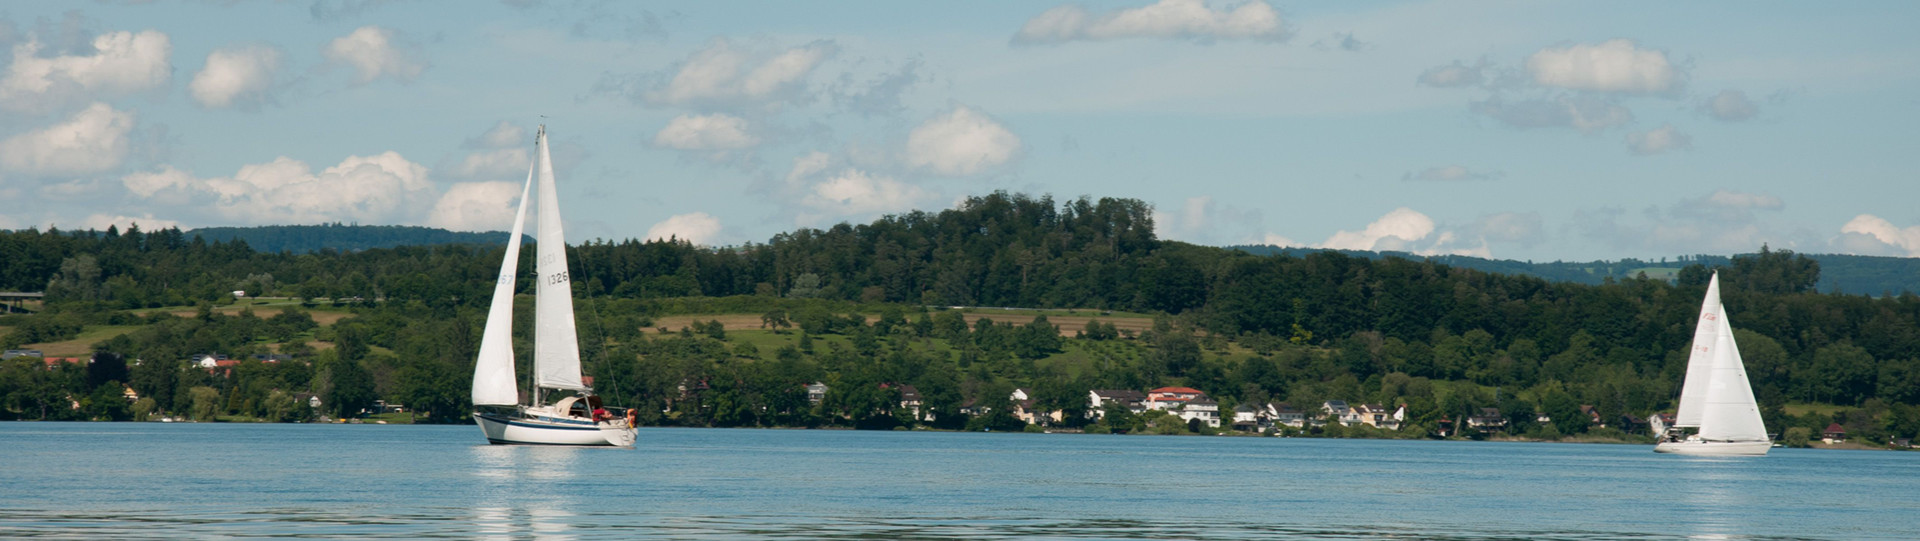 Hof Geiger am Bodensee. Blick vom See